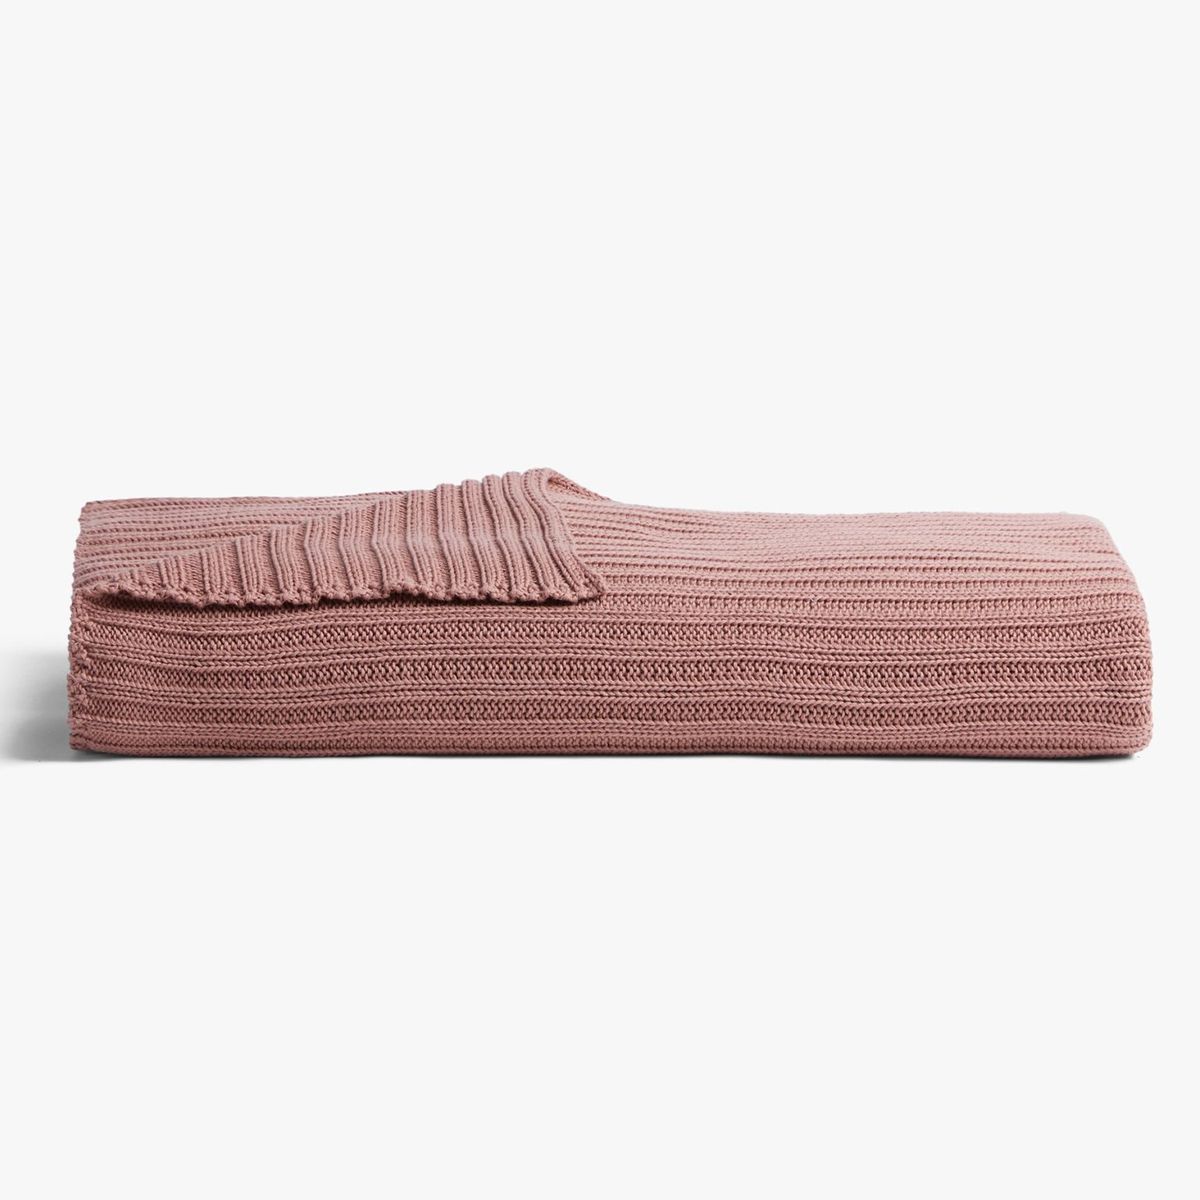 Pink knit throw blanket